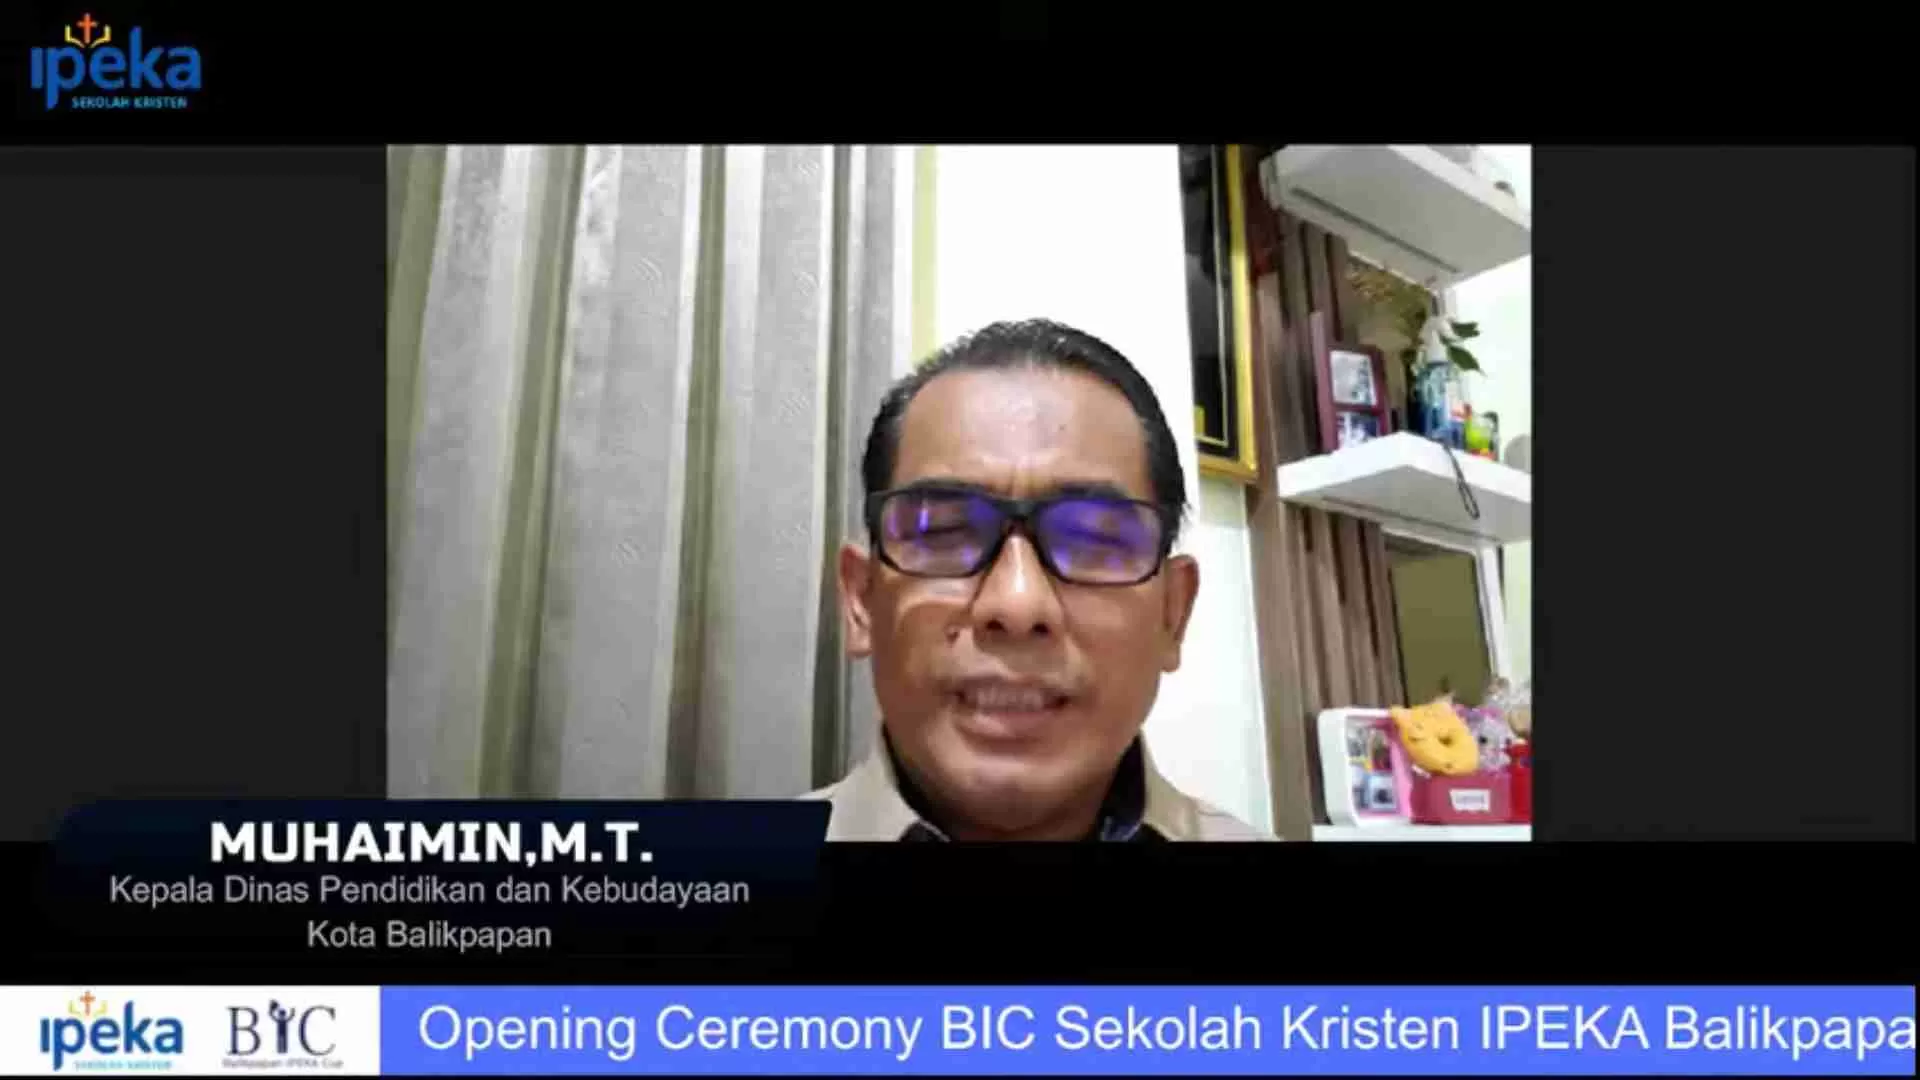 Kepala Dinas Pendidikan dan Kebudayaan Kota Balikpapan, Muhaimin, M.T. hadir pada opening ceremony secara daring. BIC 2021 berlangsung dari 18 September 2021 hingga 2 Oktober 2021.